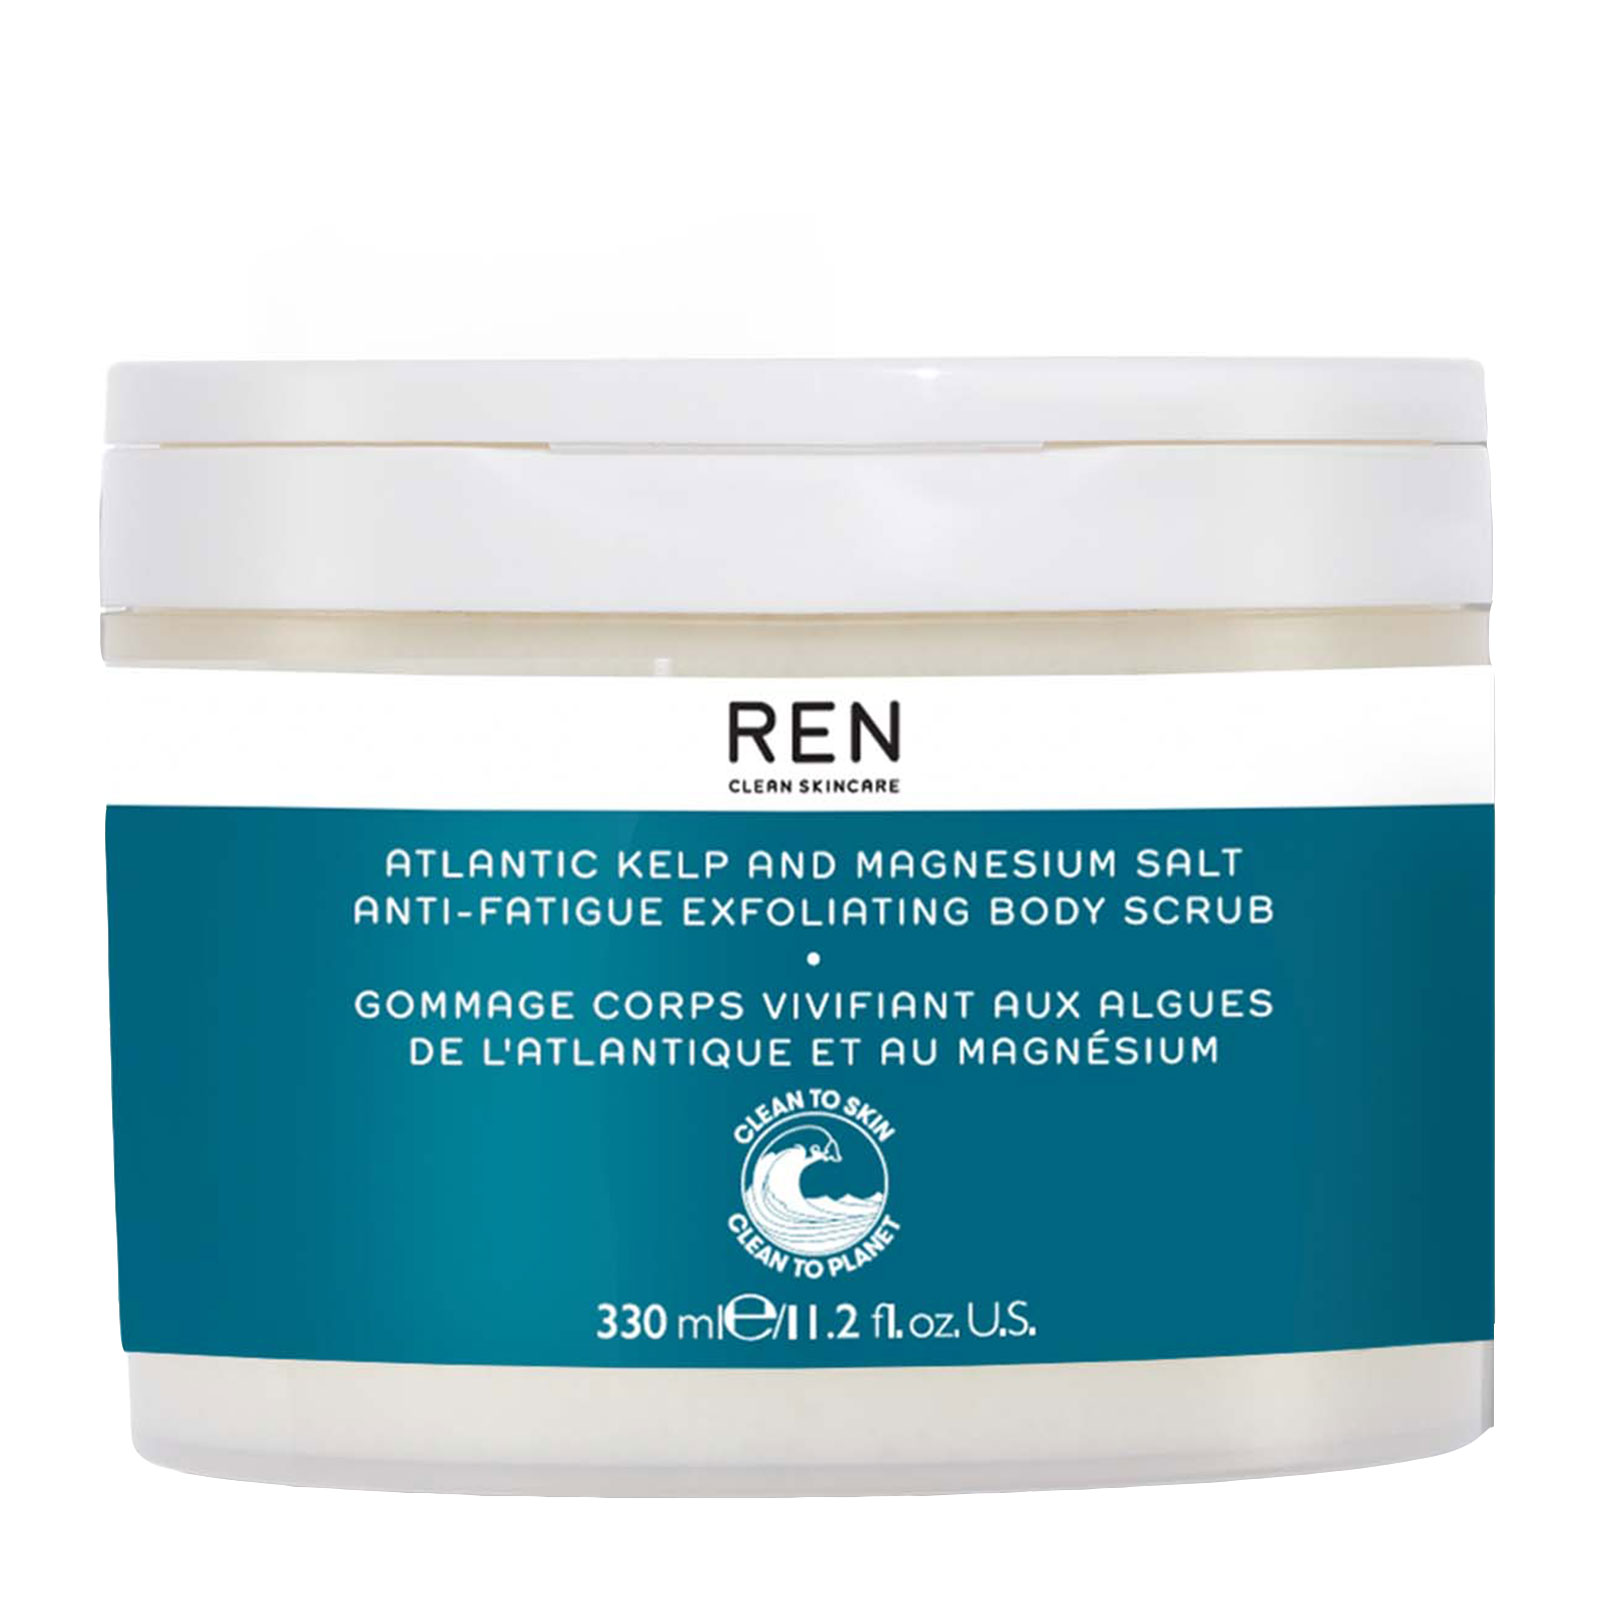 Ren Clean Skincare Atlantic Kelp And Magnesium Salt Anti-Fatigue Exfoliating Body Scrub 330Ml